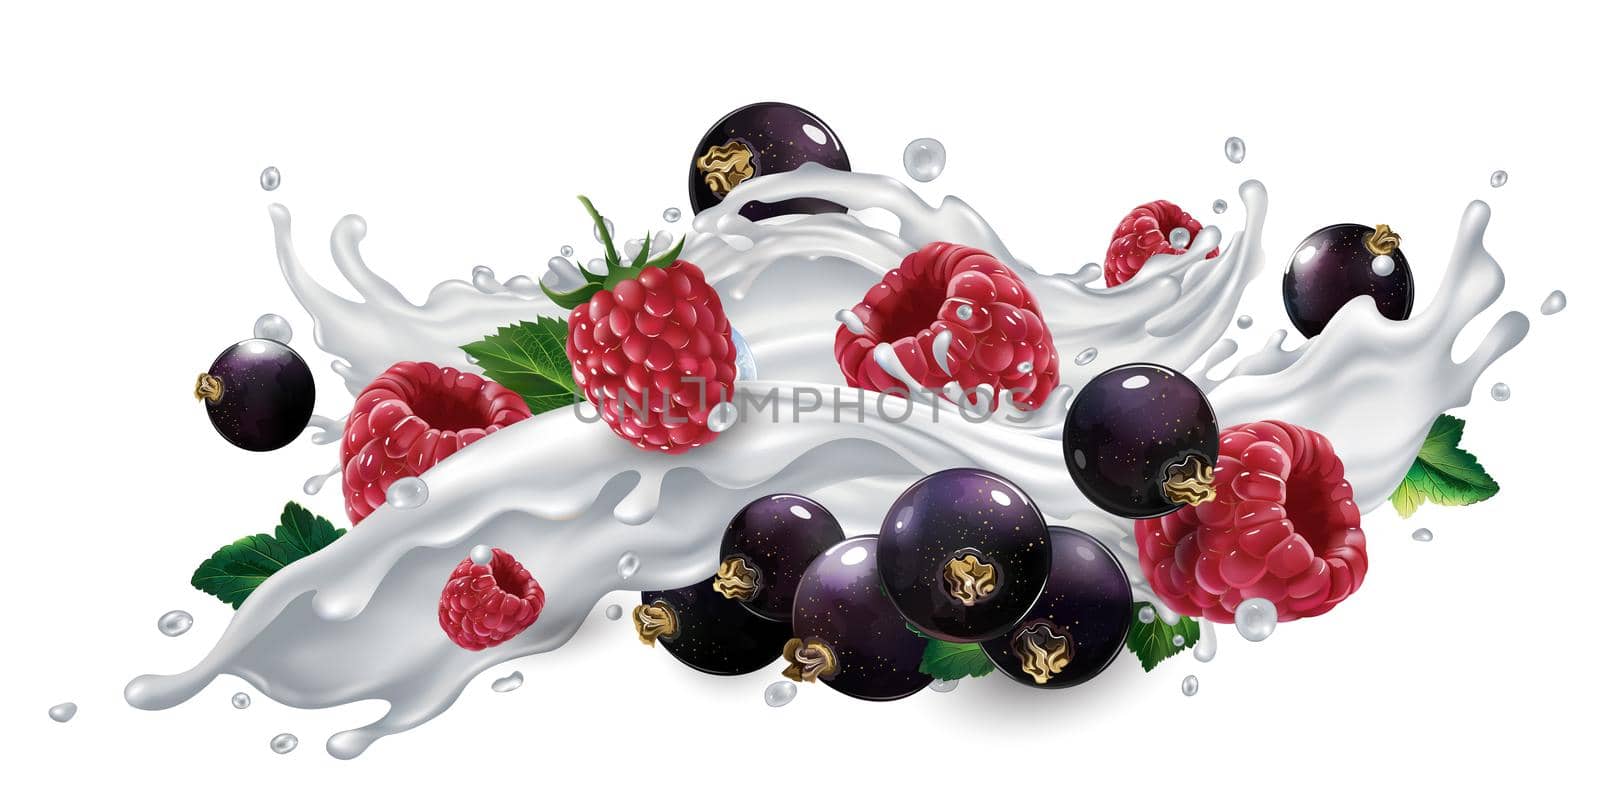 Black currants and raspberries in a yogurt or milk splash. by ConceptCafe